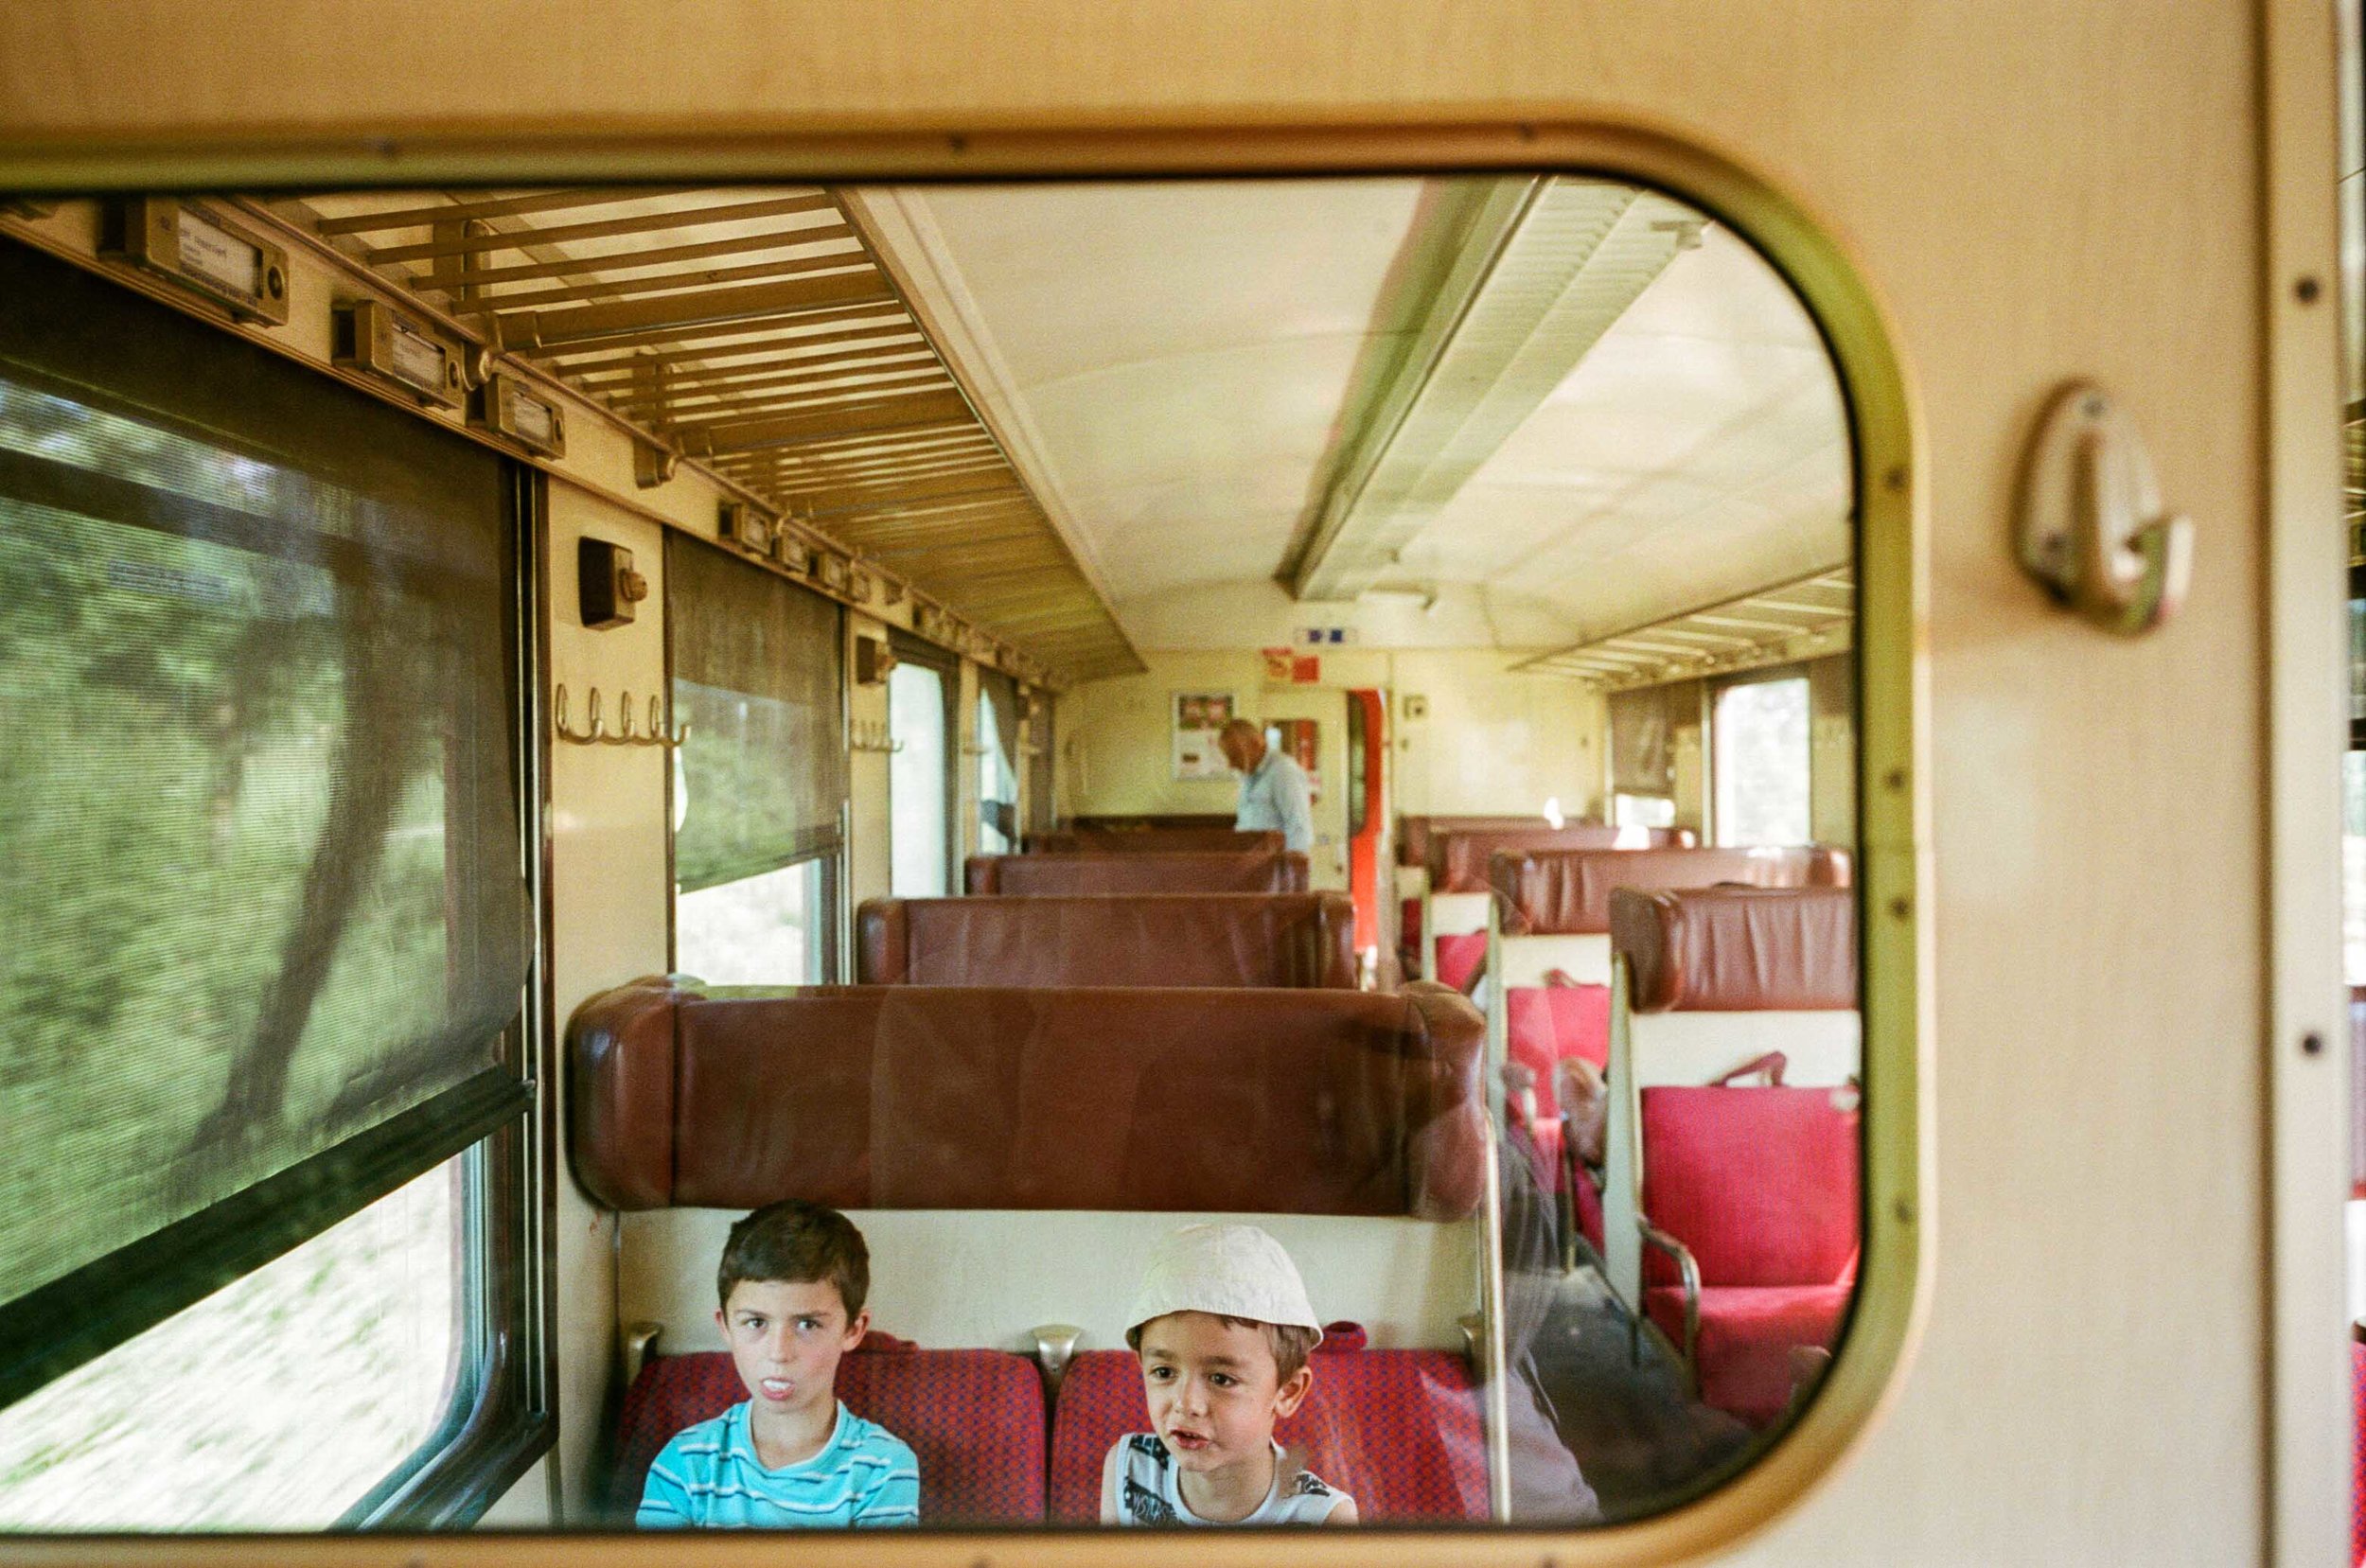  Pristina &gt; Pejë via train, Kosovo 